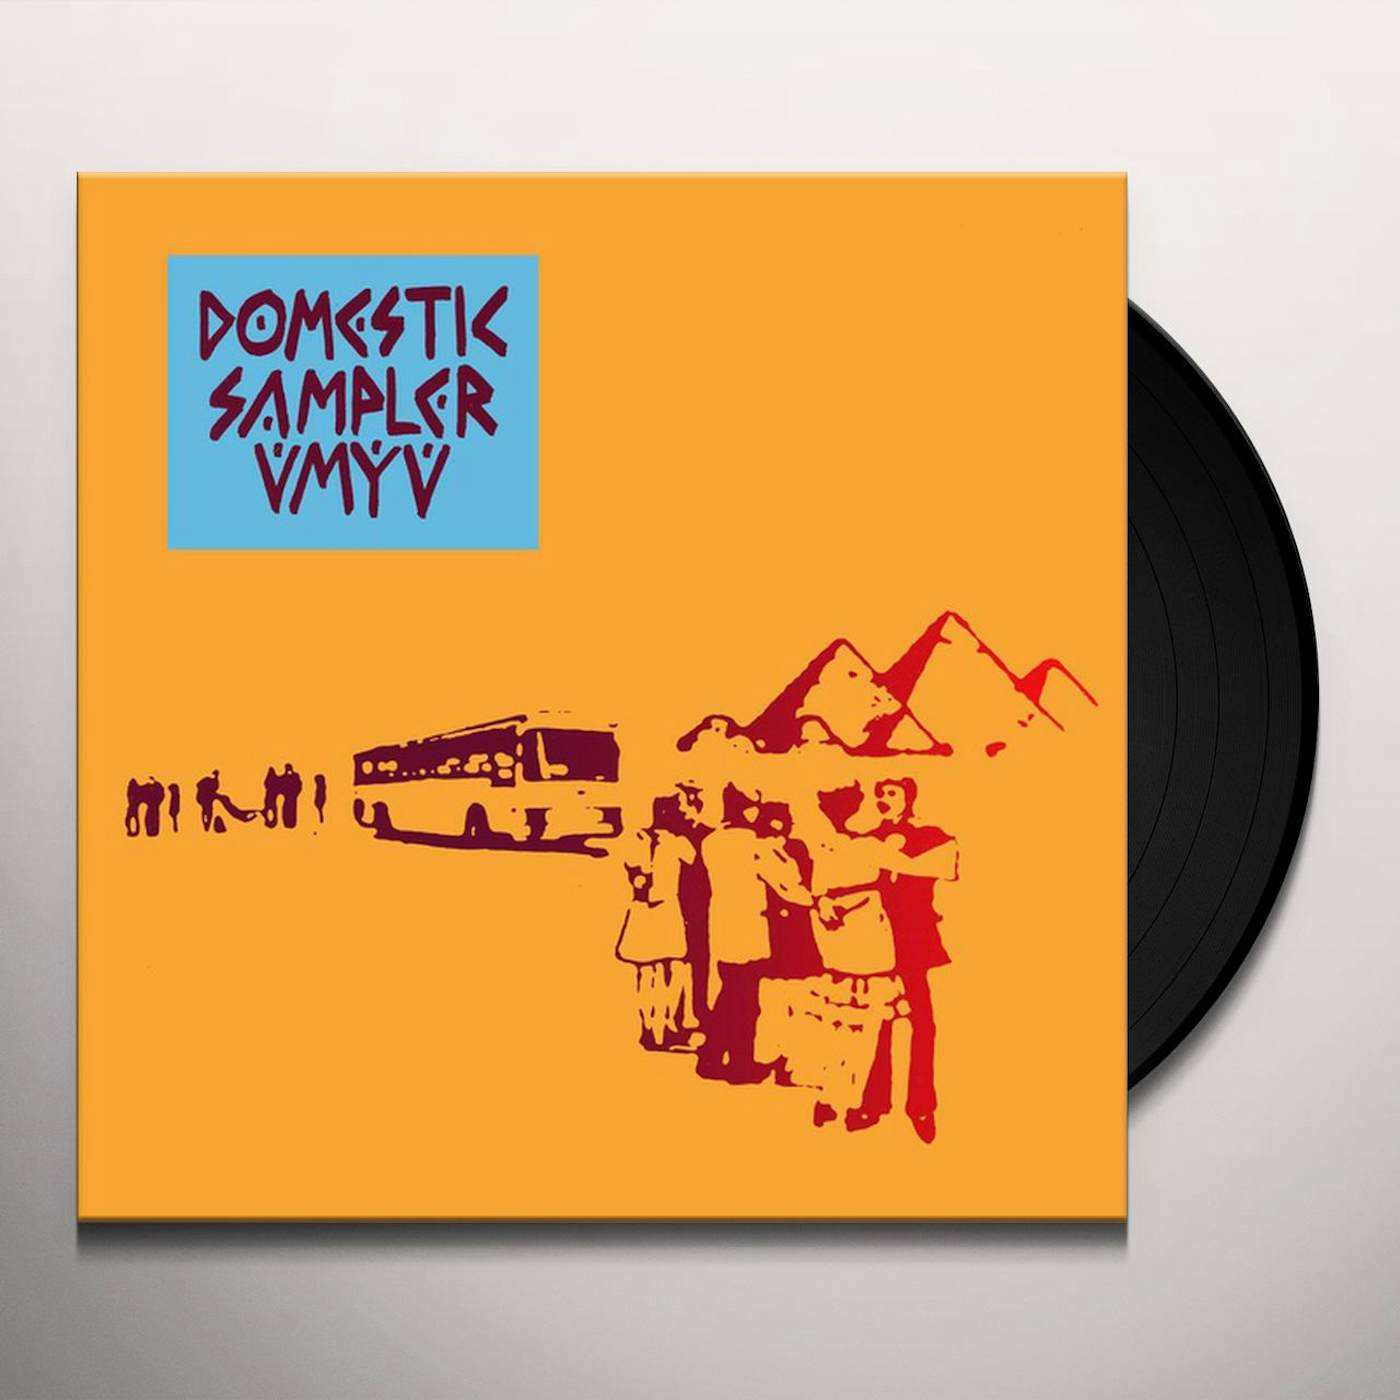 DOMESTIC SAMPLER UMYU / VARIOUS Vinyl Record